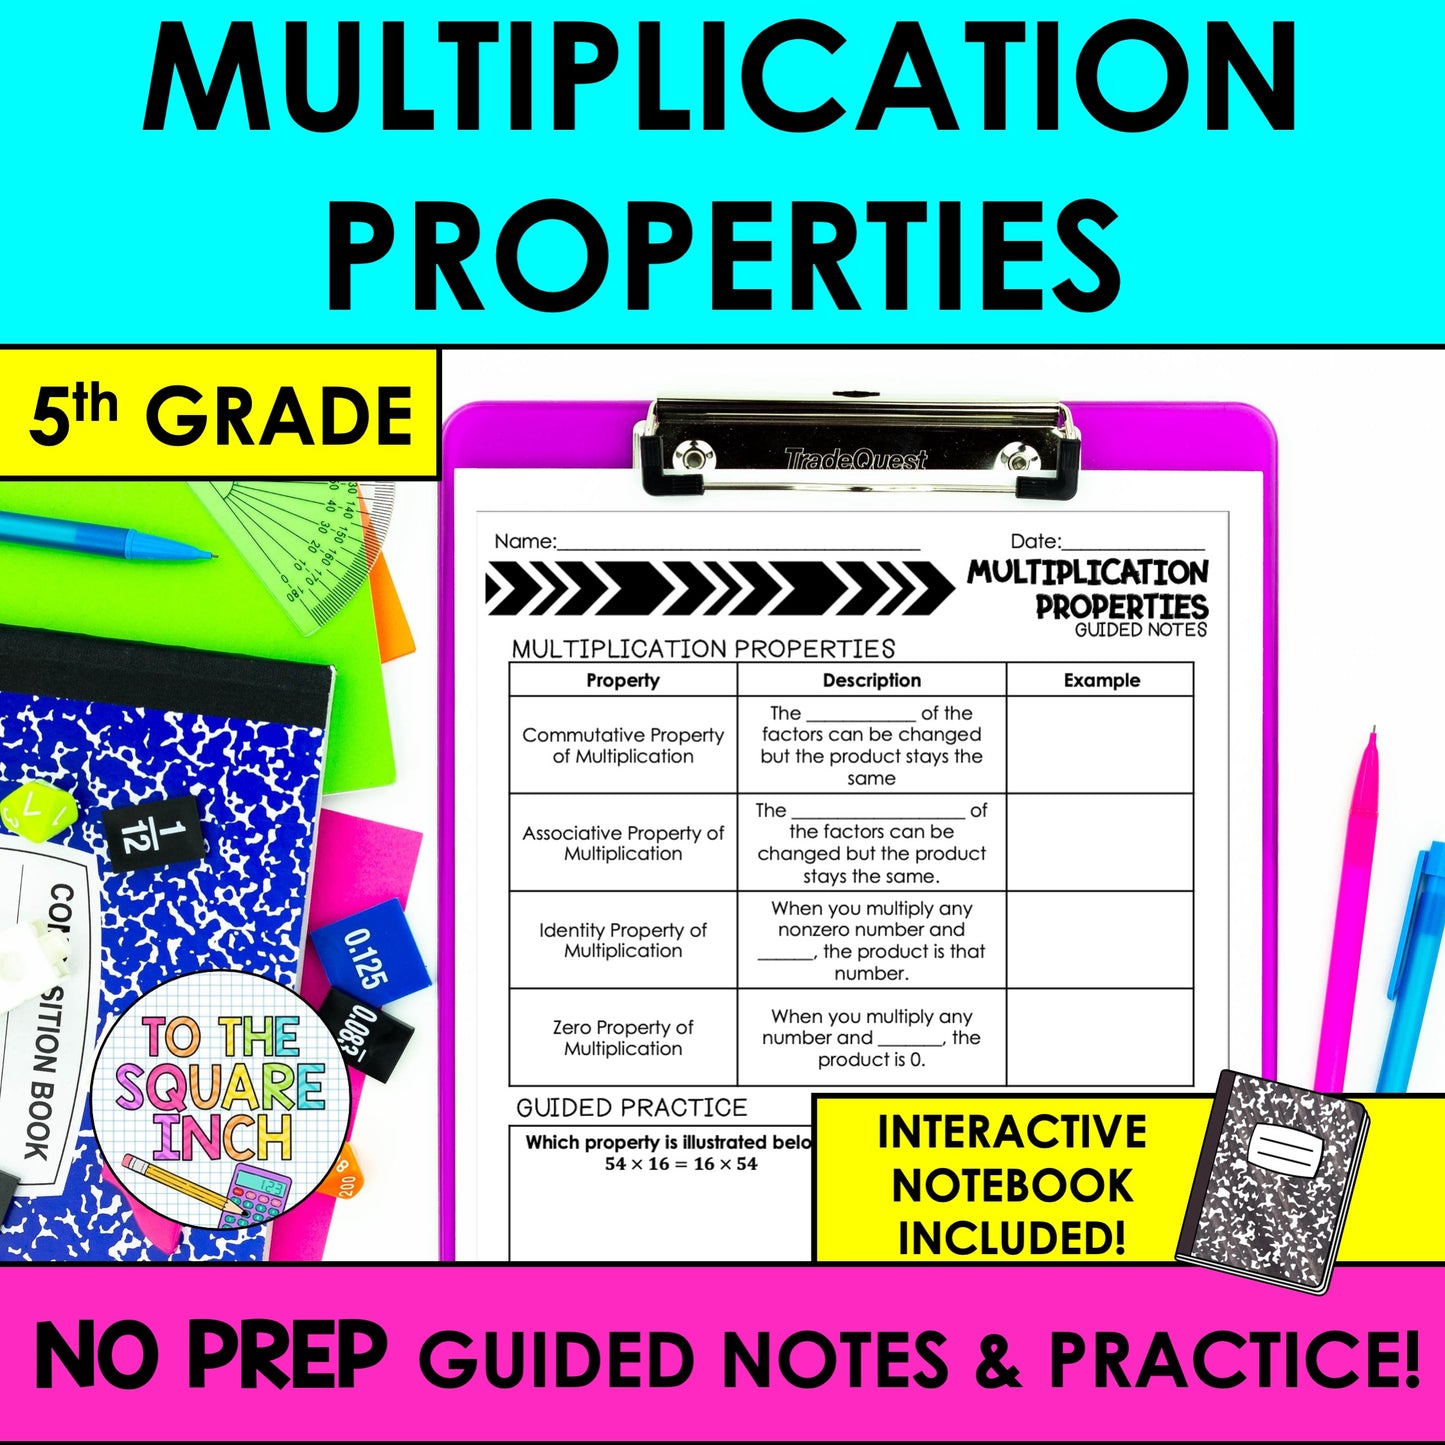 Multiplication Properties Notes